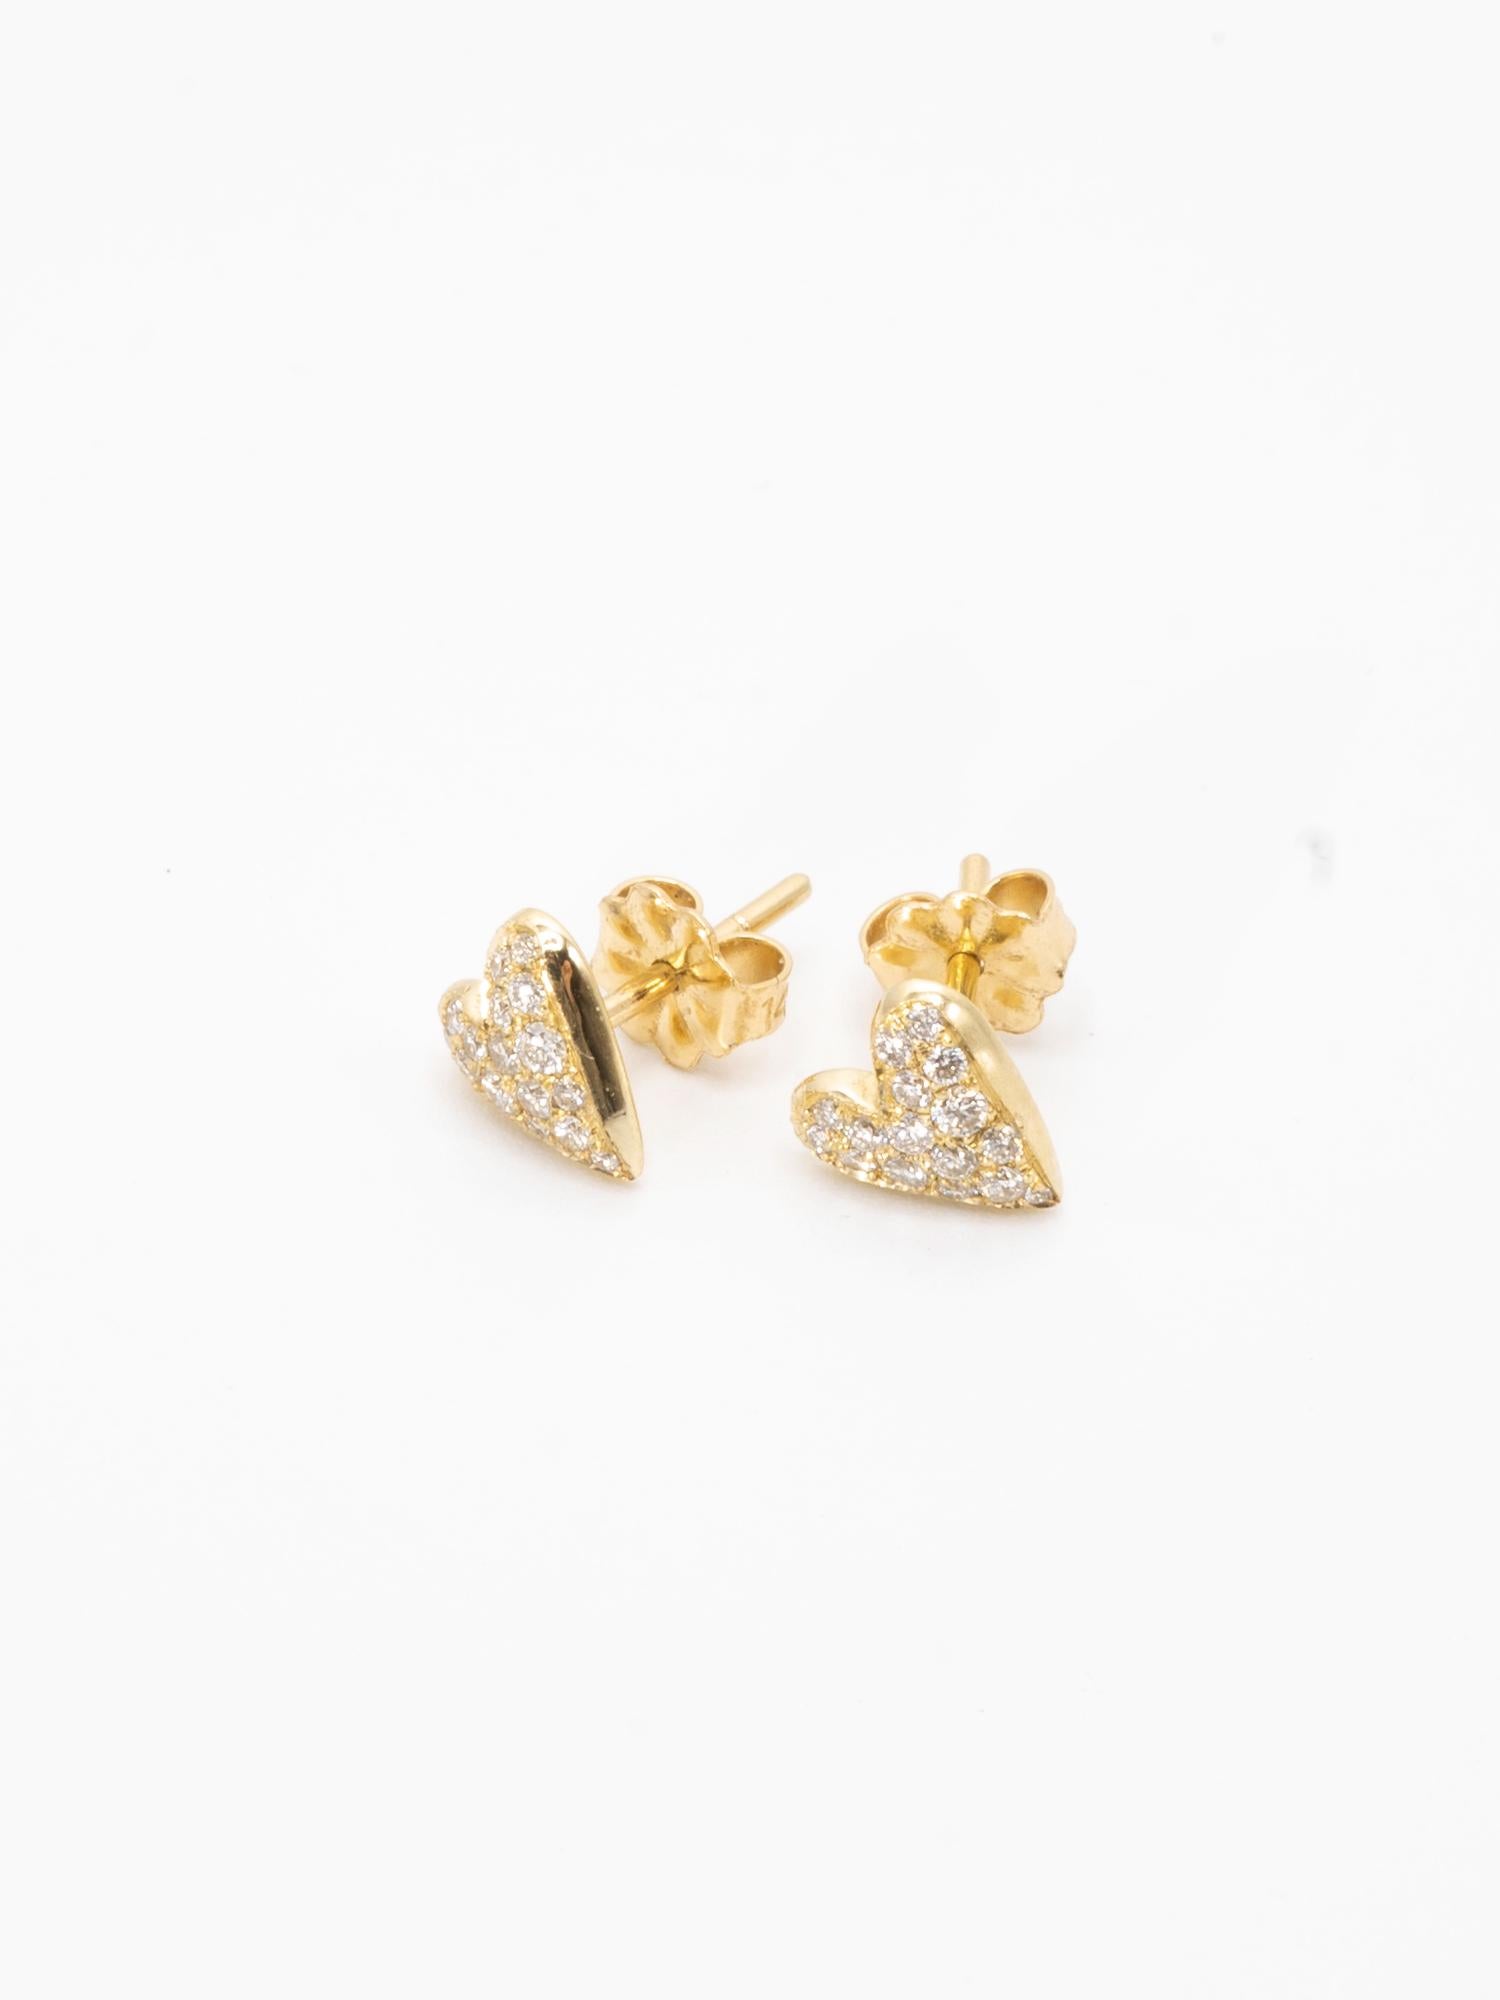 Contemporary 14 Karat Gold Pavé Heart Stud Earrings by Mon Pilar For Sale